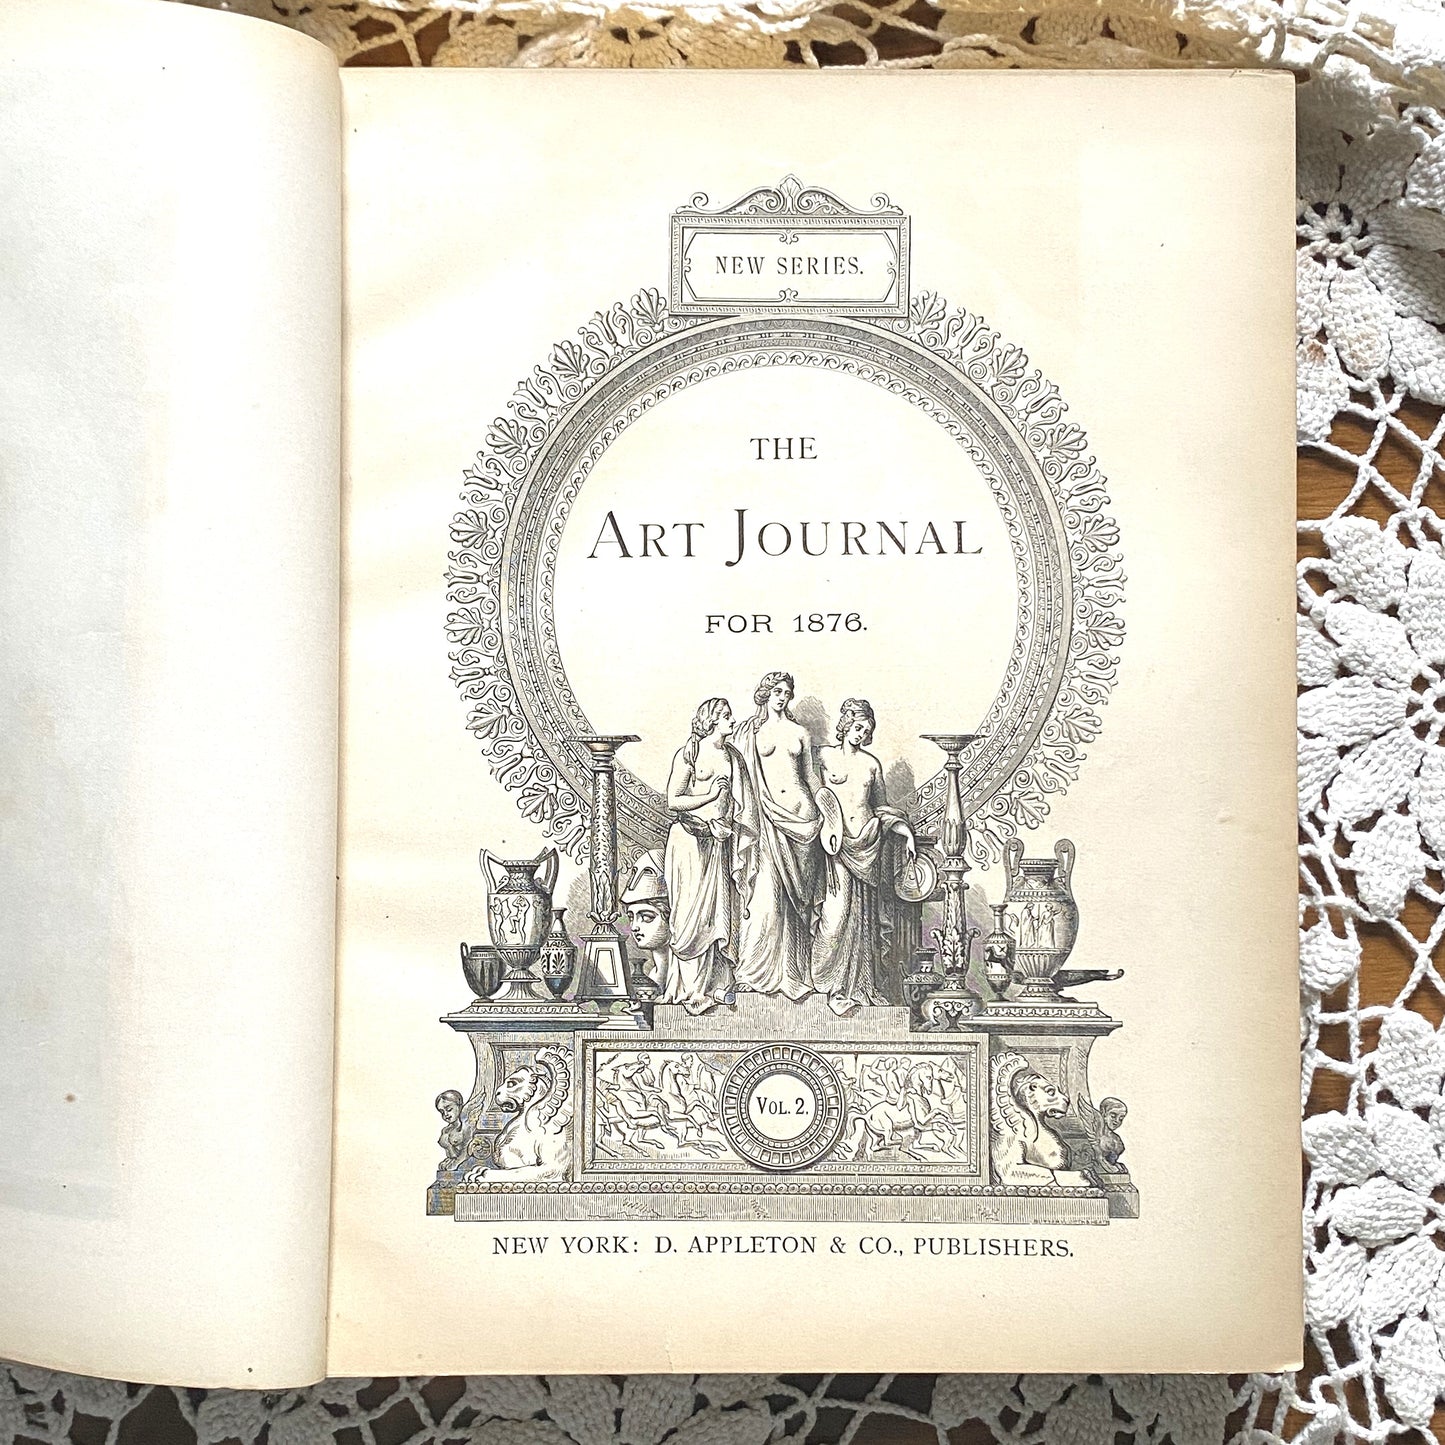 The Art Journal for 1876